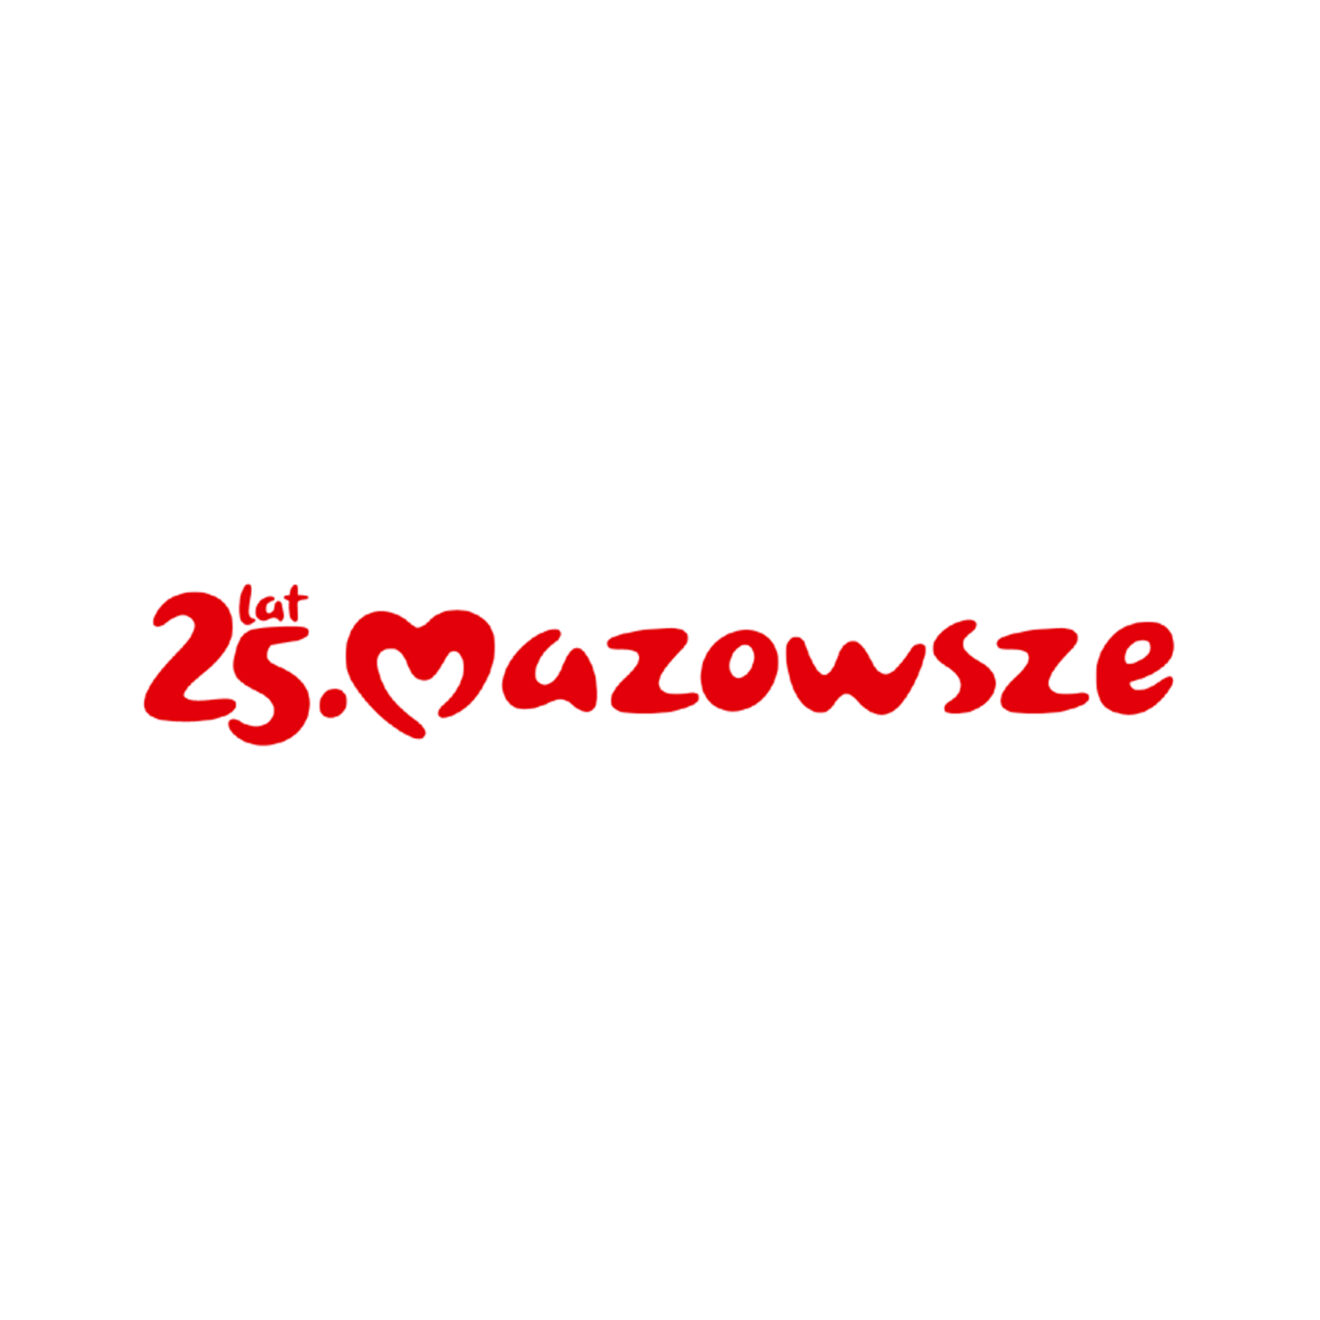 Logotyp 25 lat mazowsza